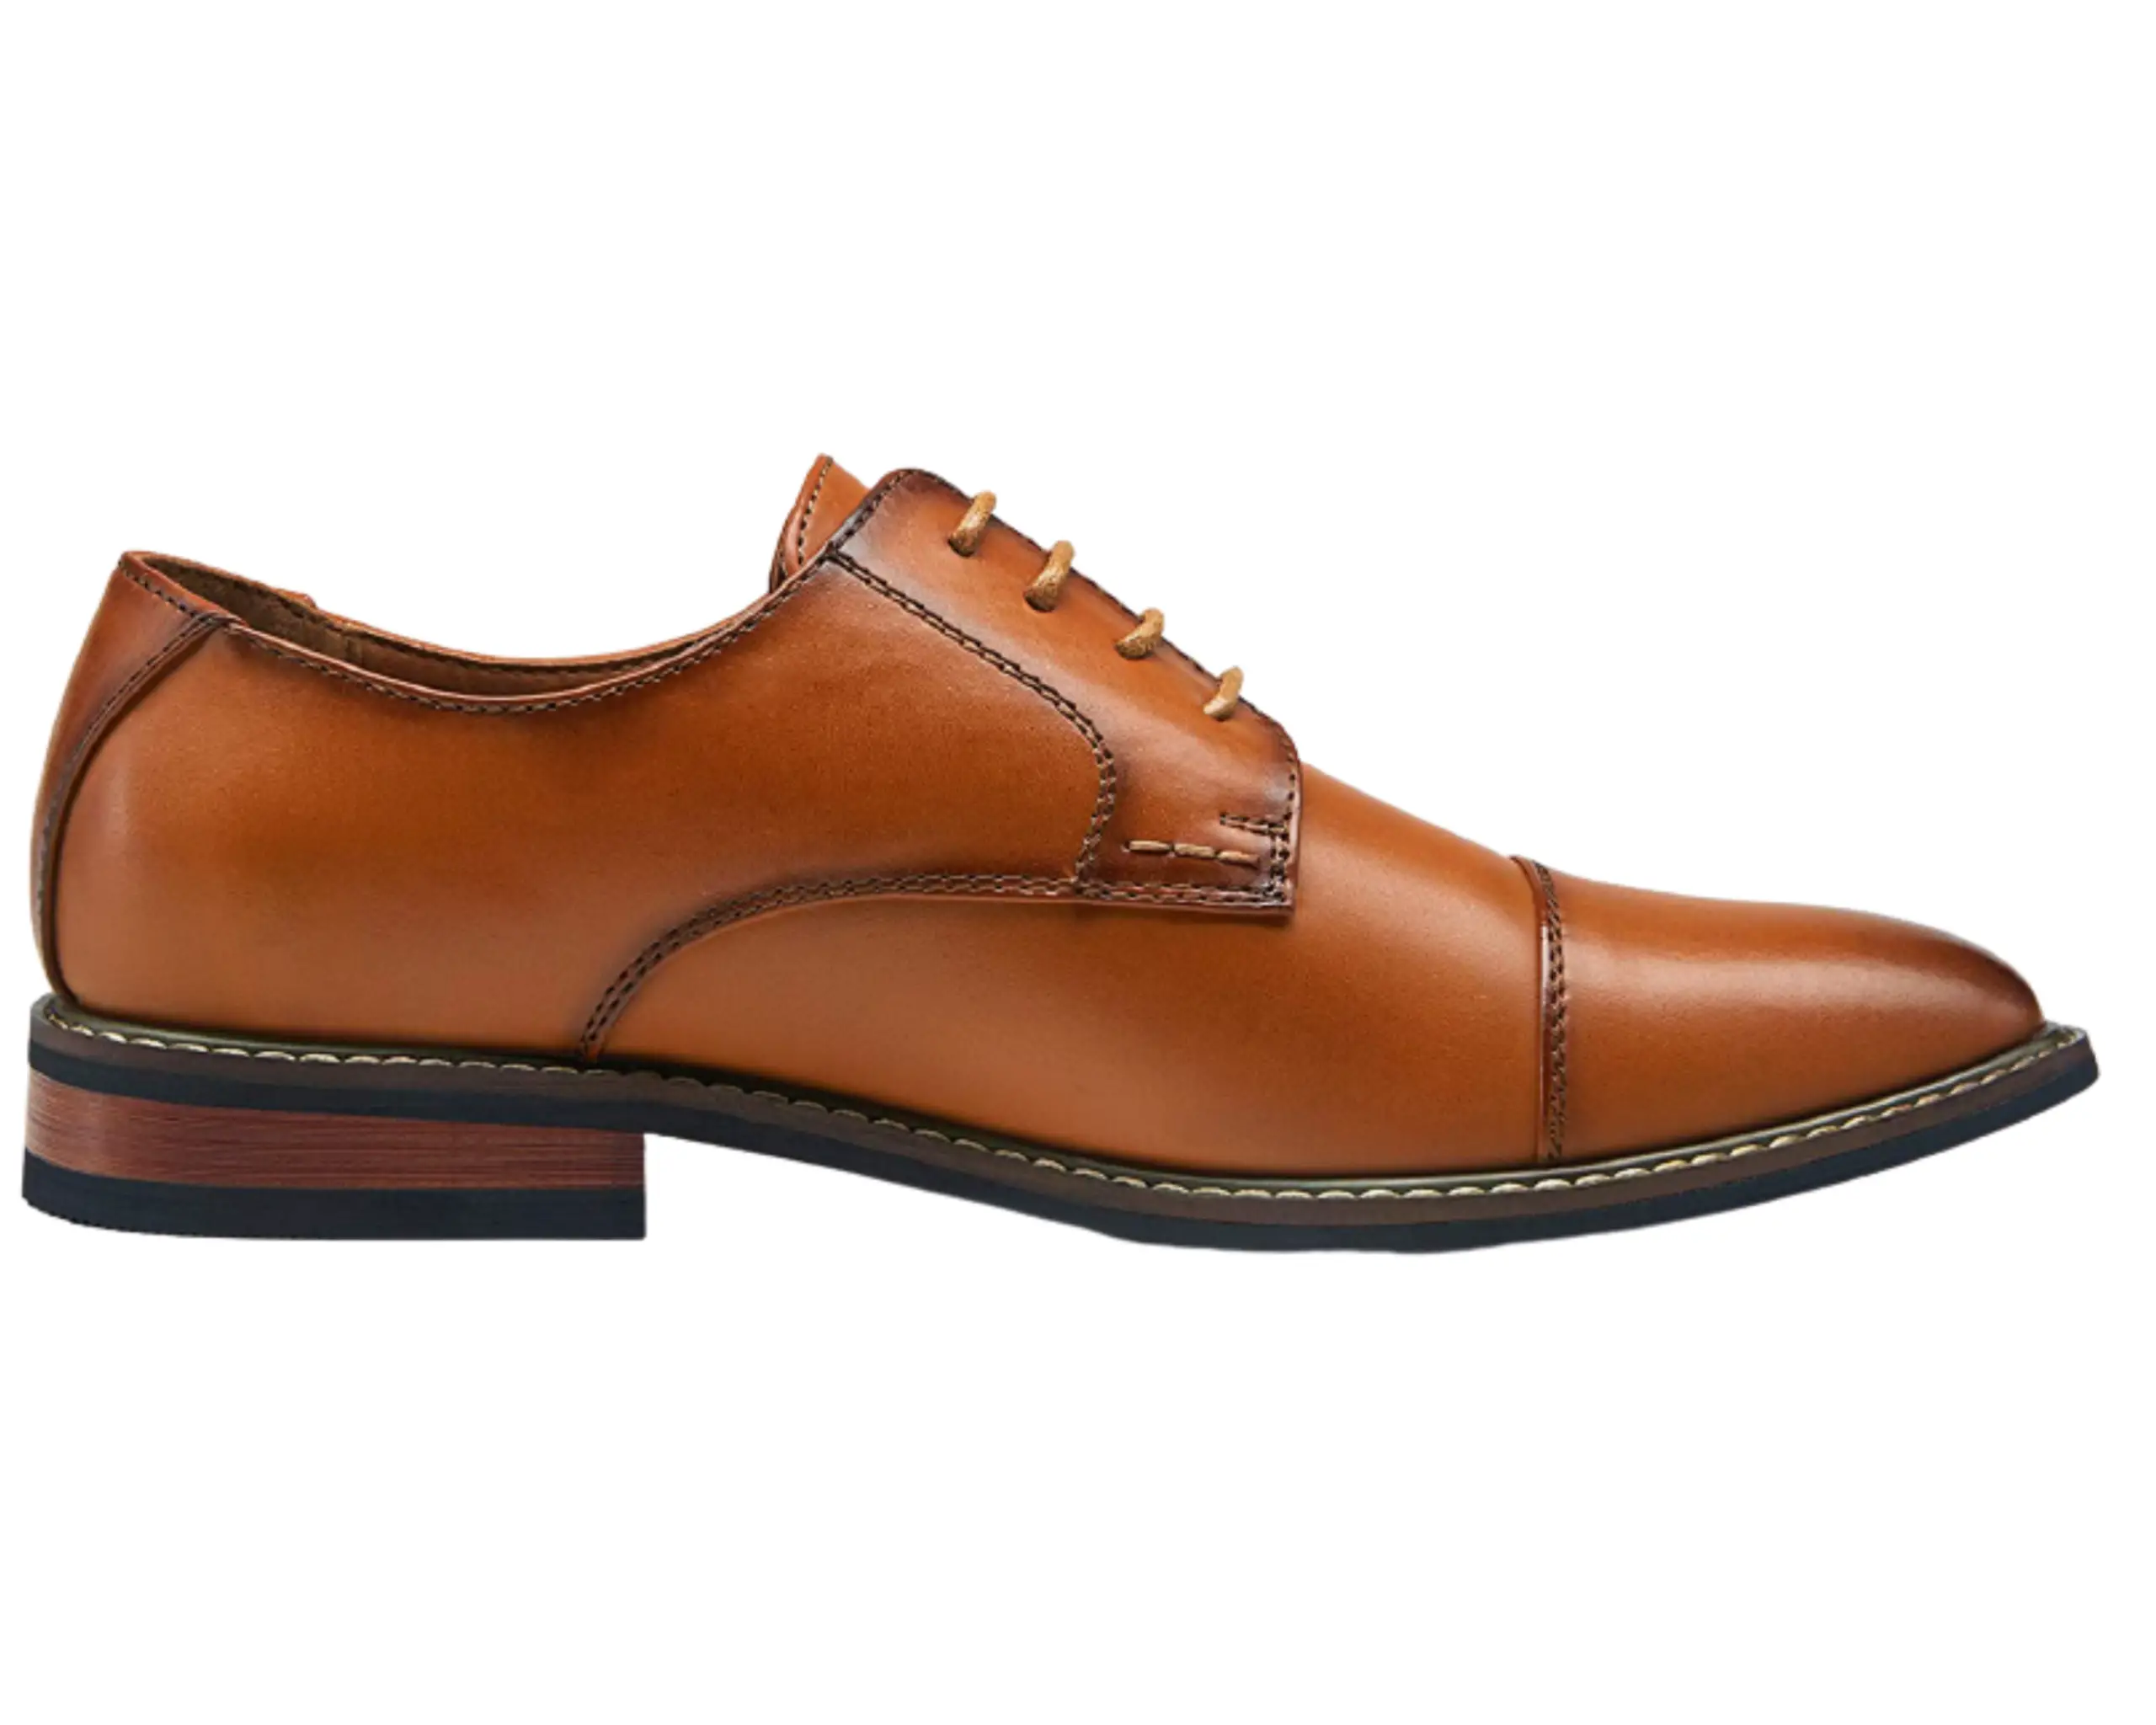 Best men's brown leather shoe